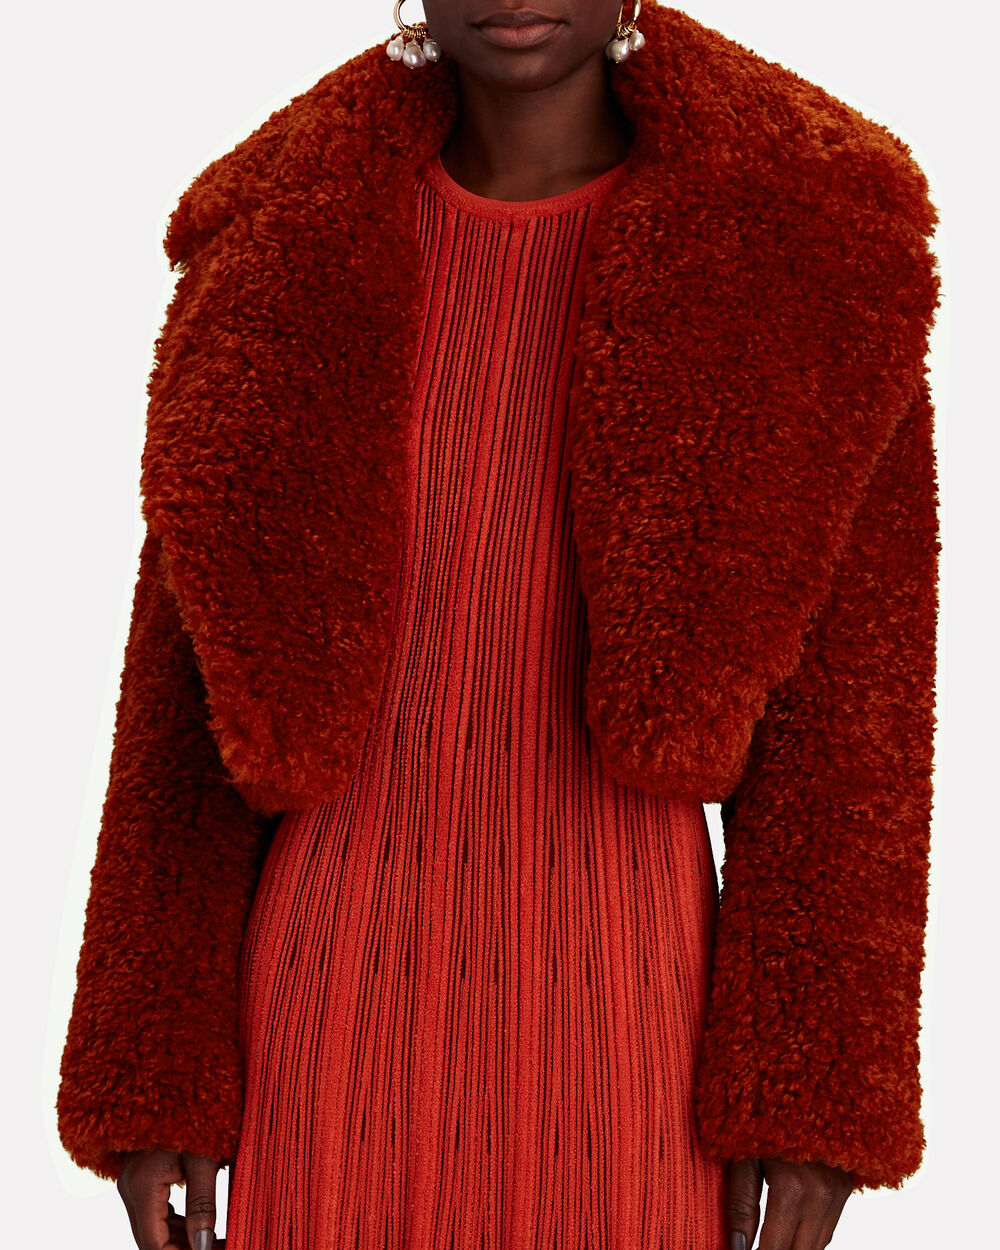 Ronny Kobo Helena Bouclé Jacket In Red | INTERMIX®